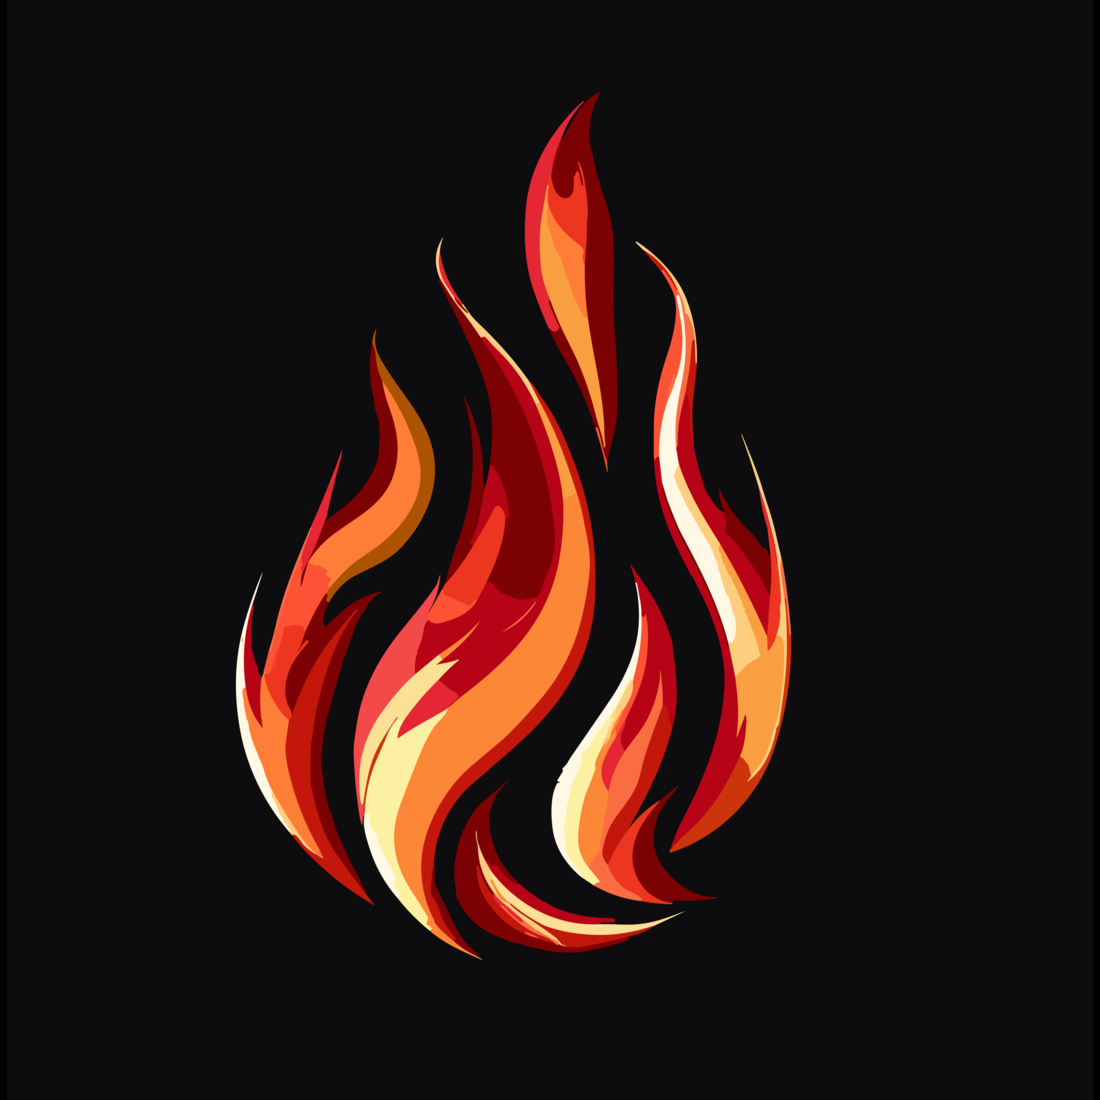 Fire Drop Logo cover image.